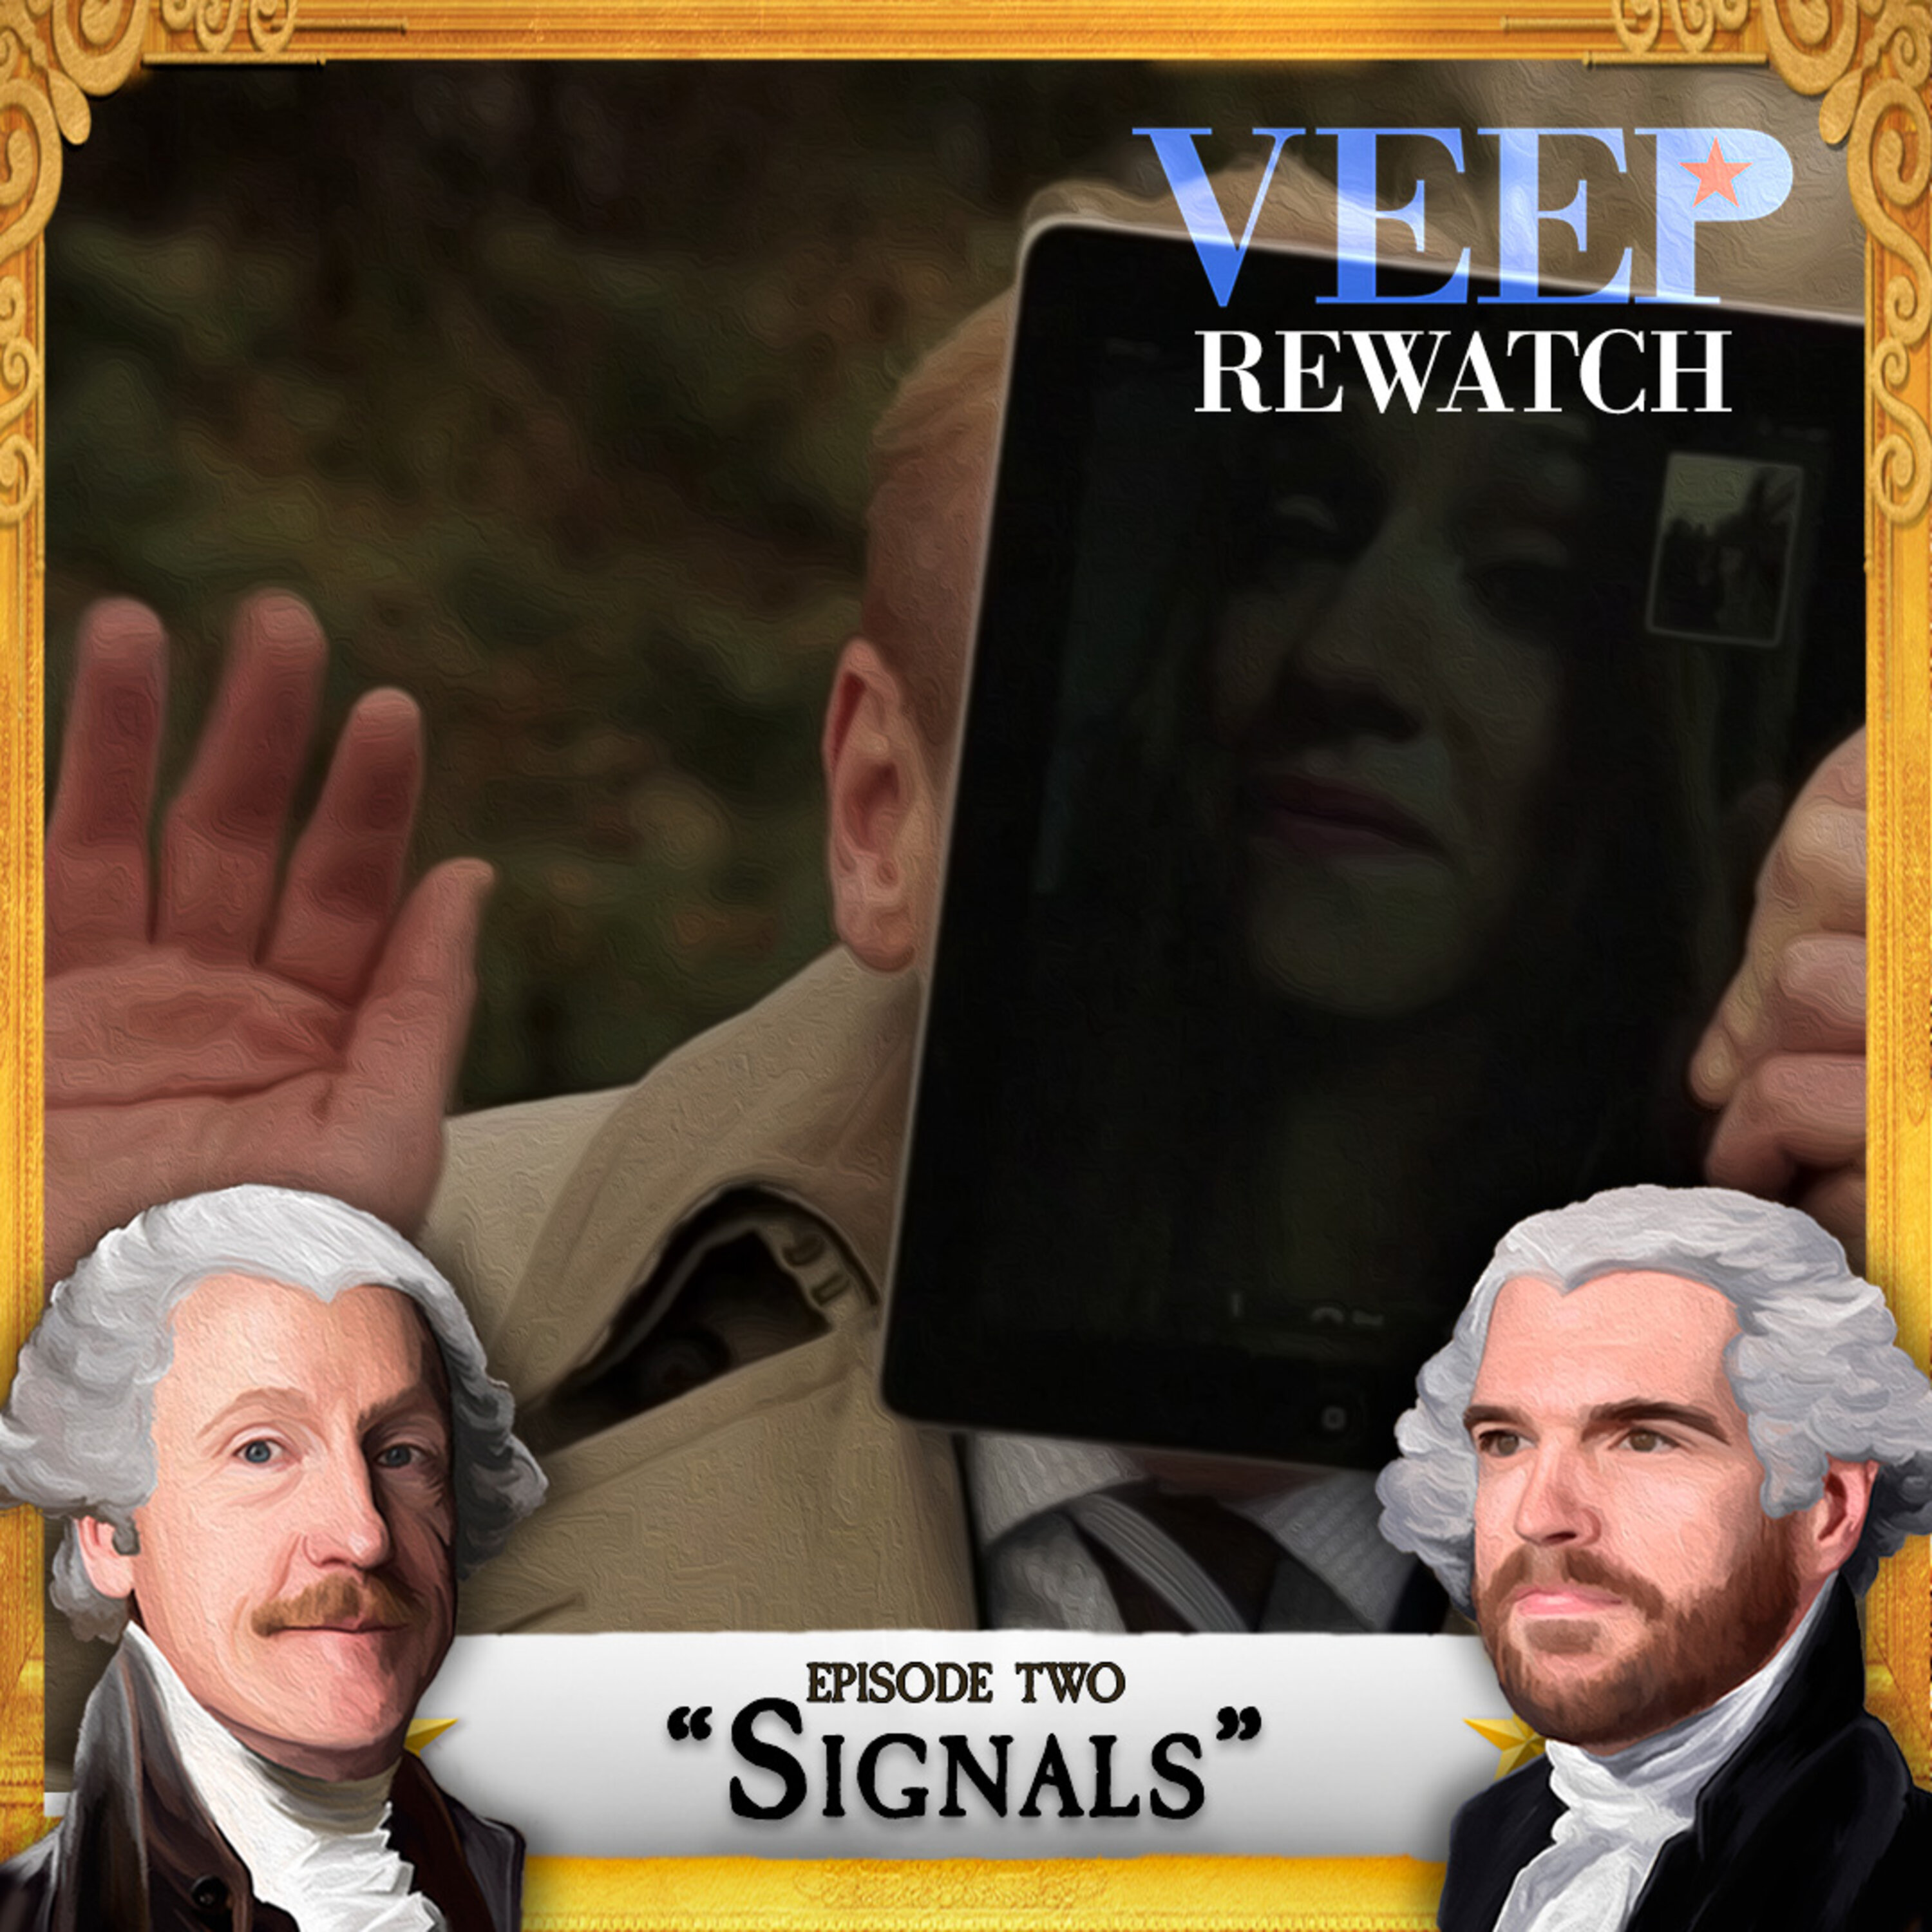 “Signals” (S2E2) Veep Rewatch with Matt and Tim